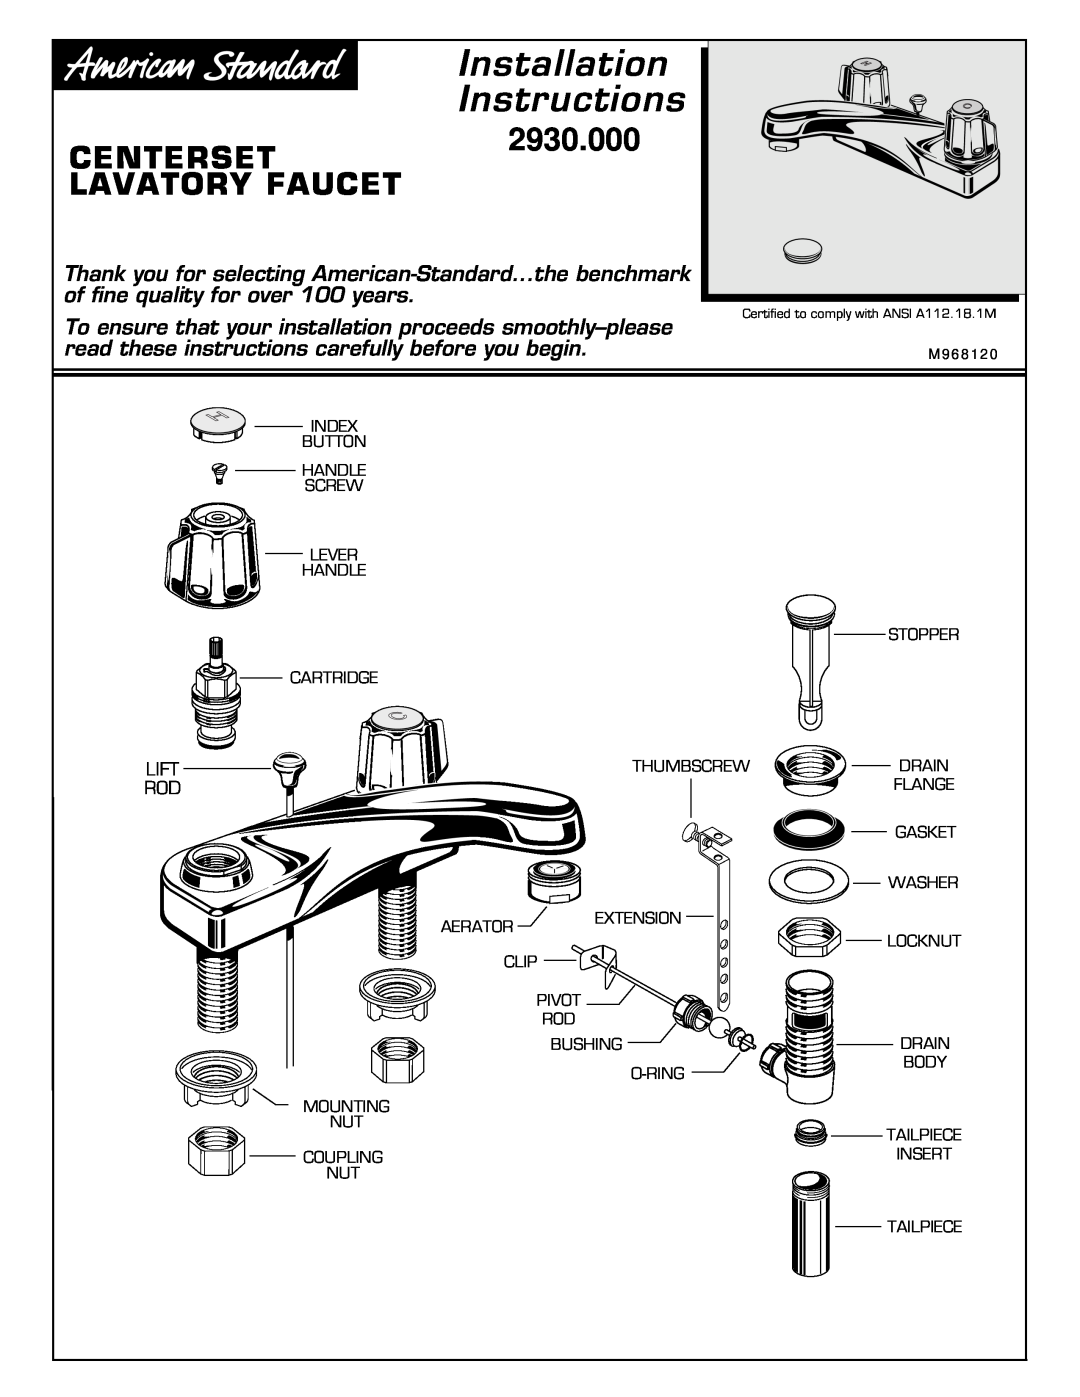 American Standard M968120 installation instructions Installation Instructions, 2930.000, Centerset Lavatory Faucet 